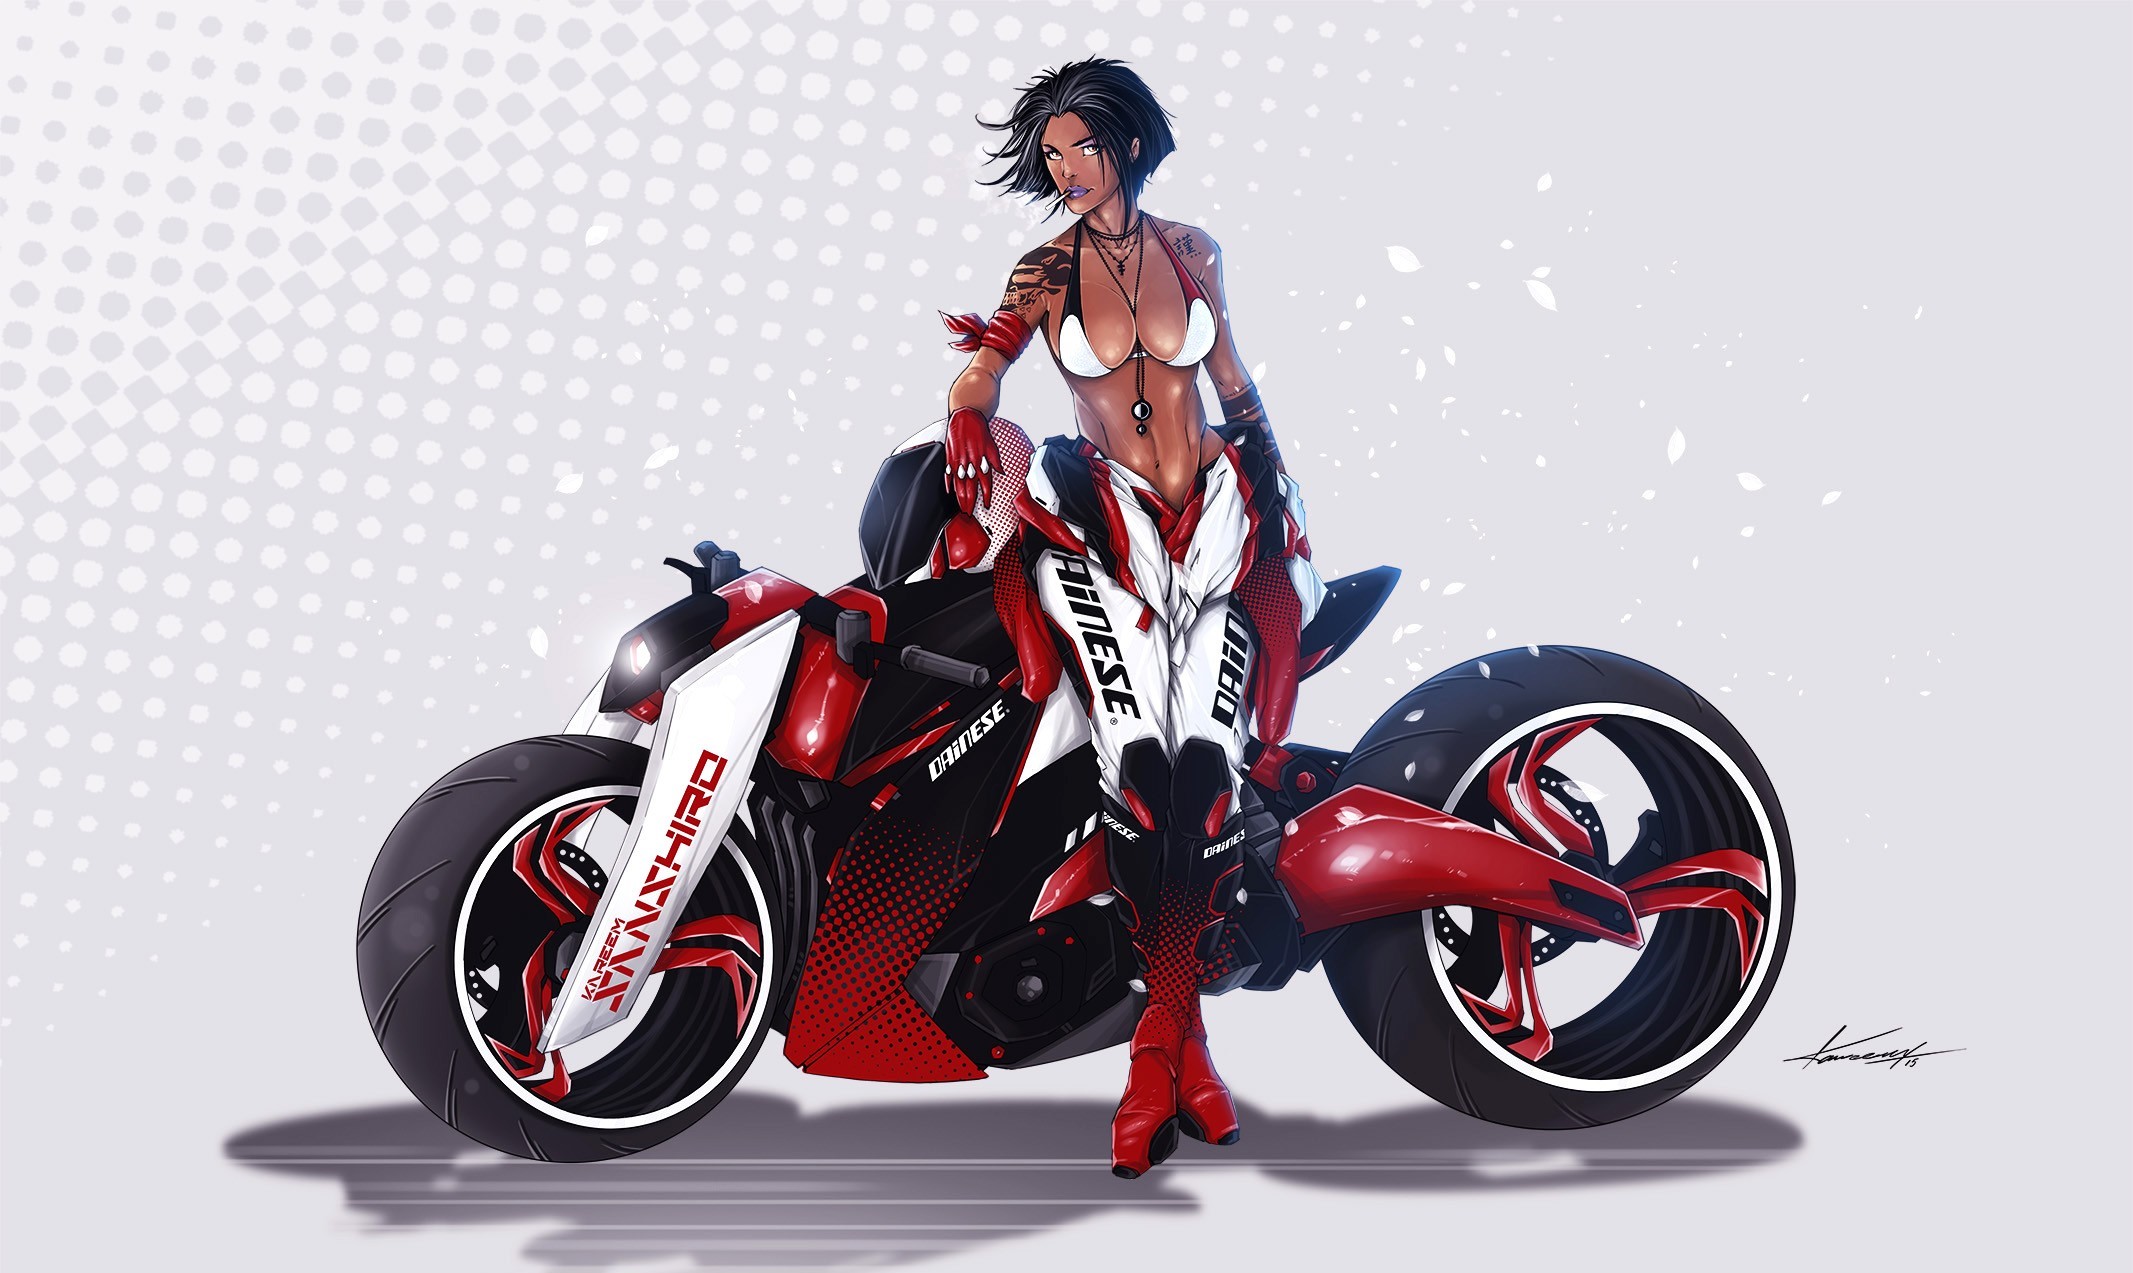 General 2133x1273 motorcycle comic art vehicle women with motorcycles artwork dark hair bra boobs belly leaning